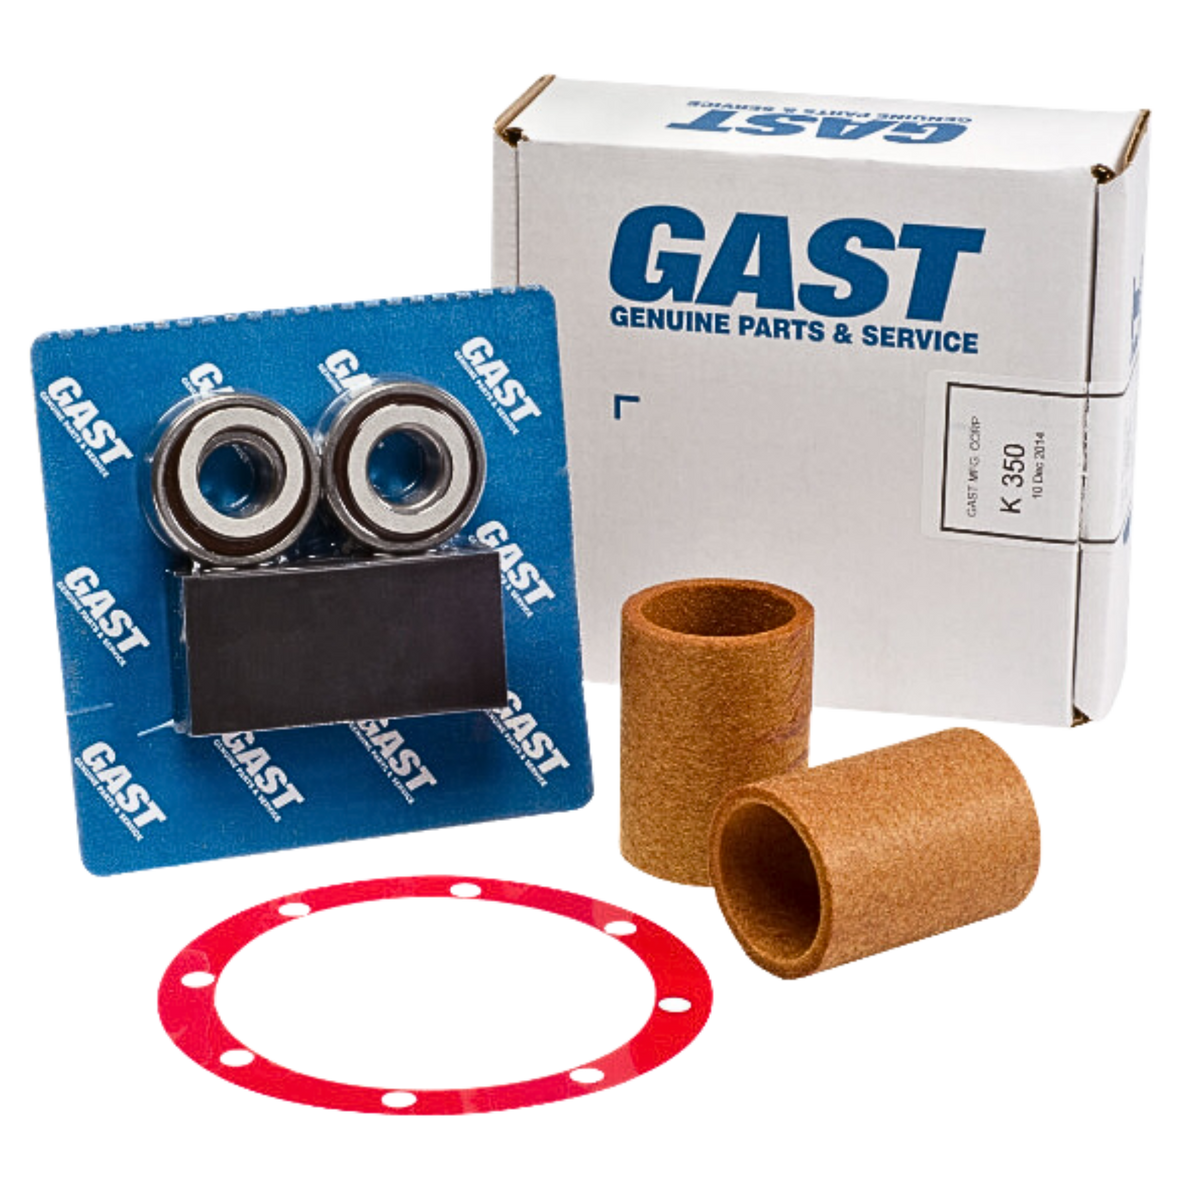 Gast | 2067/2567 Oil-less Service Kit | K350 used on gast product line